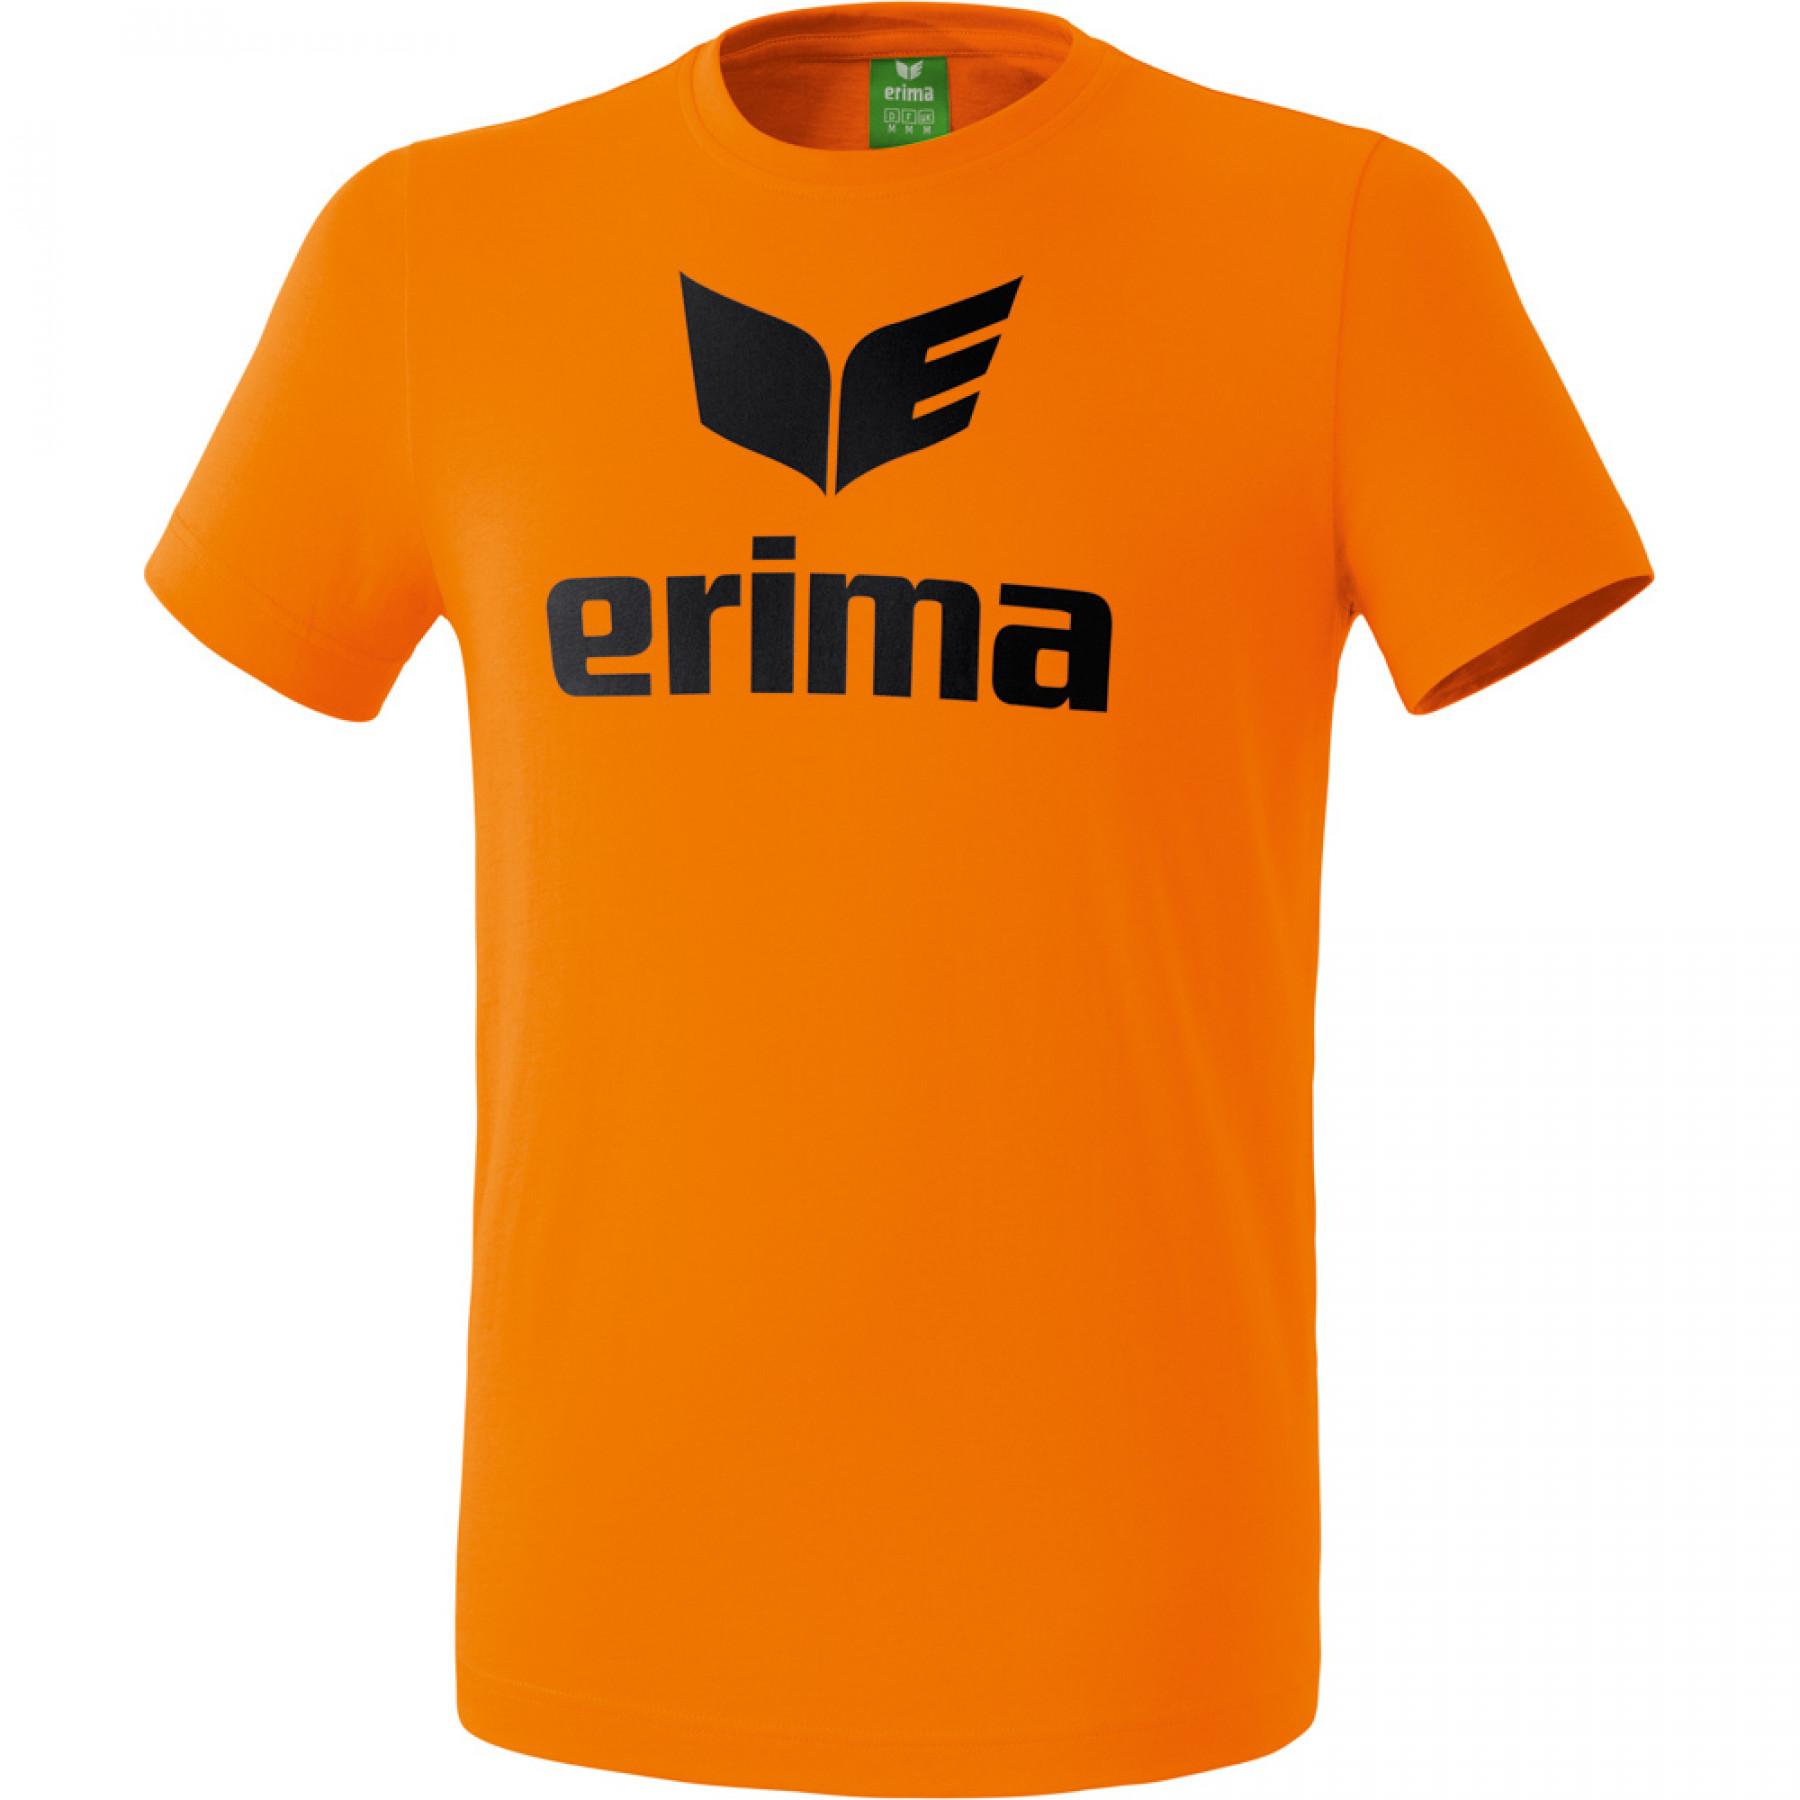 Kinder-T-shirt Erima promo